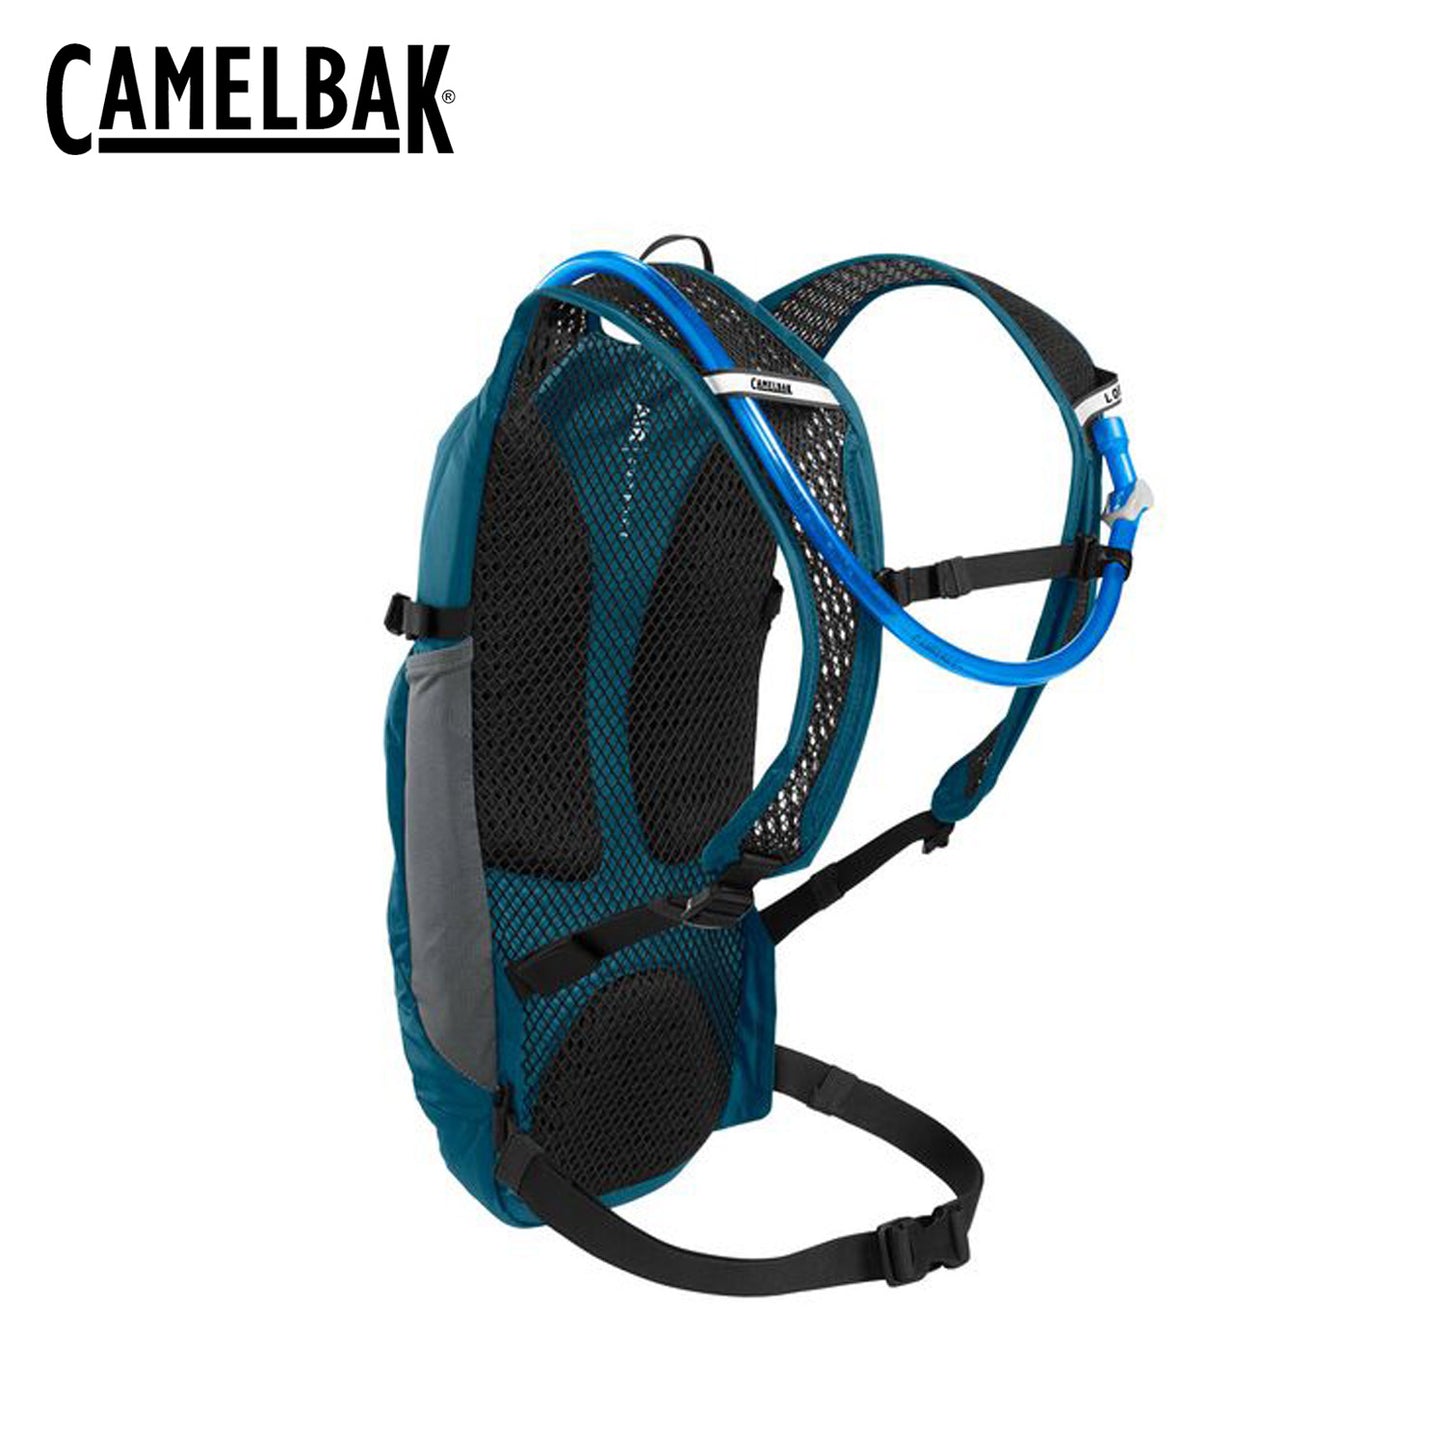 CamelBak Lobo 9 70oz Hydration Pack - Moroccan Blue/Black